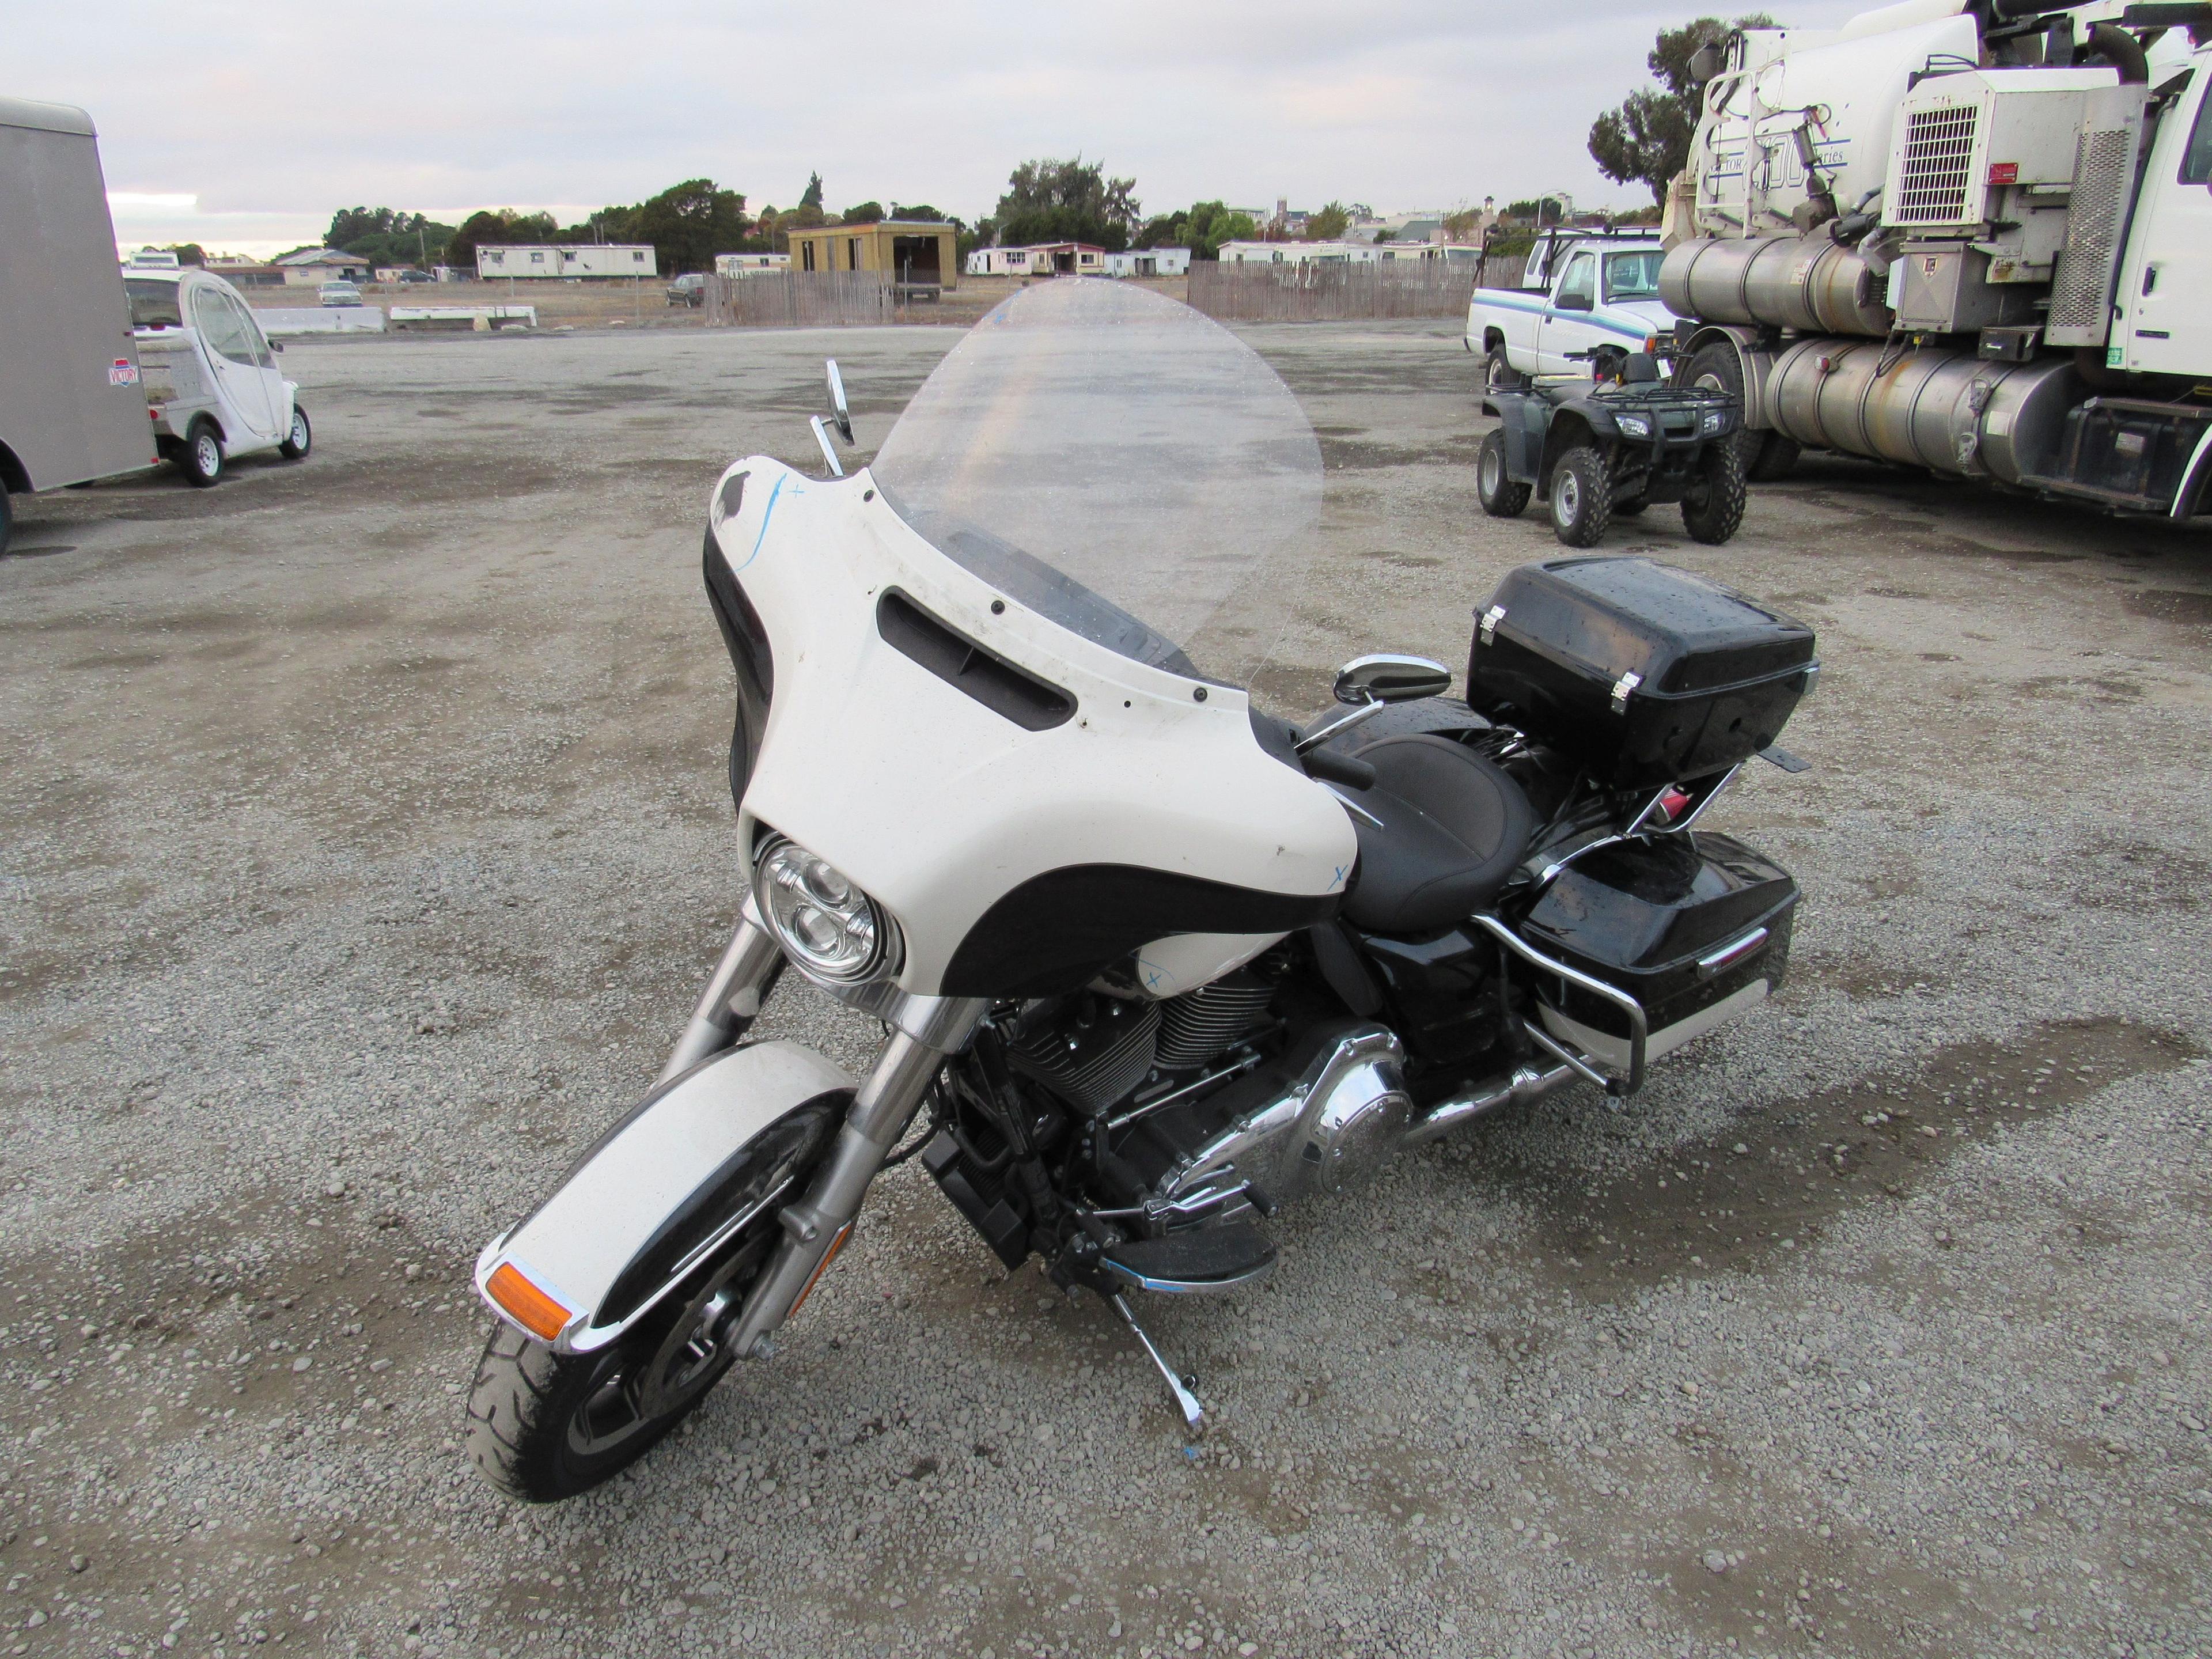 2014 HARLEY DAVIDSON 103 POLICE MOTORCYCLE (NO KEY)